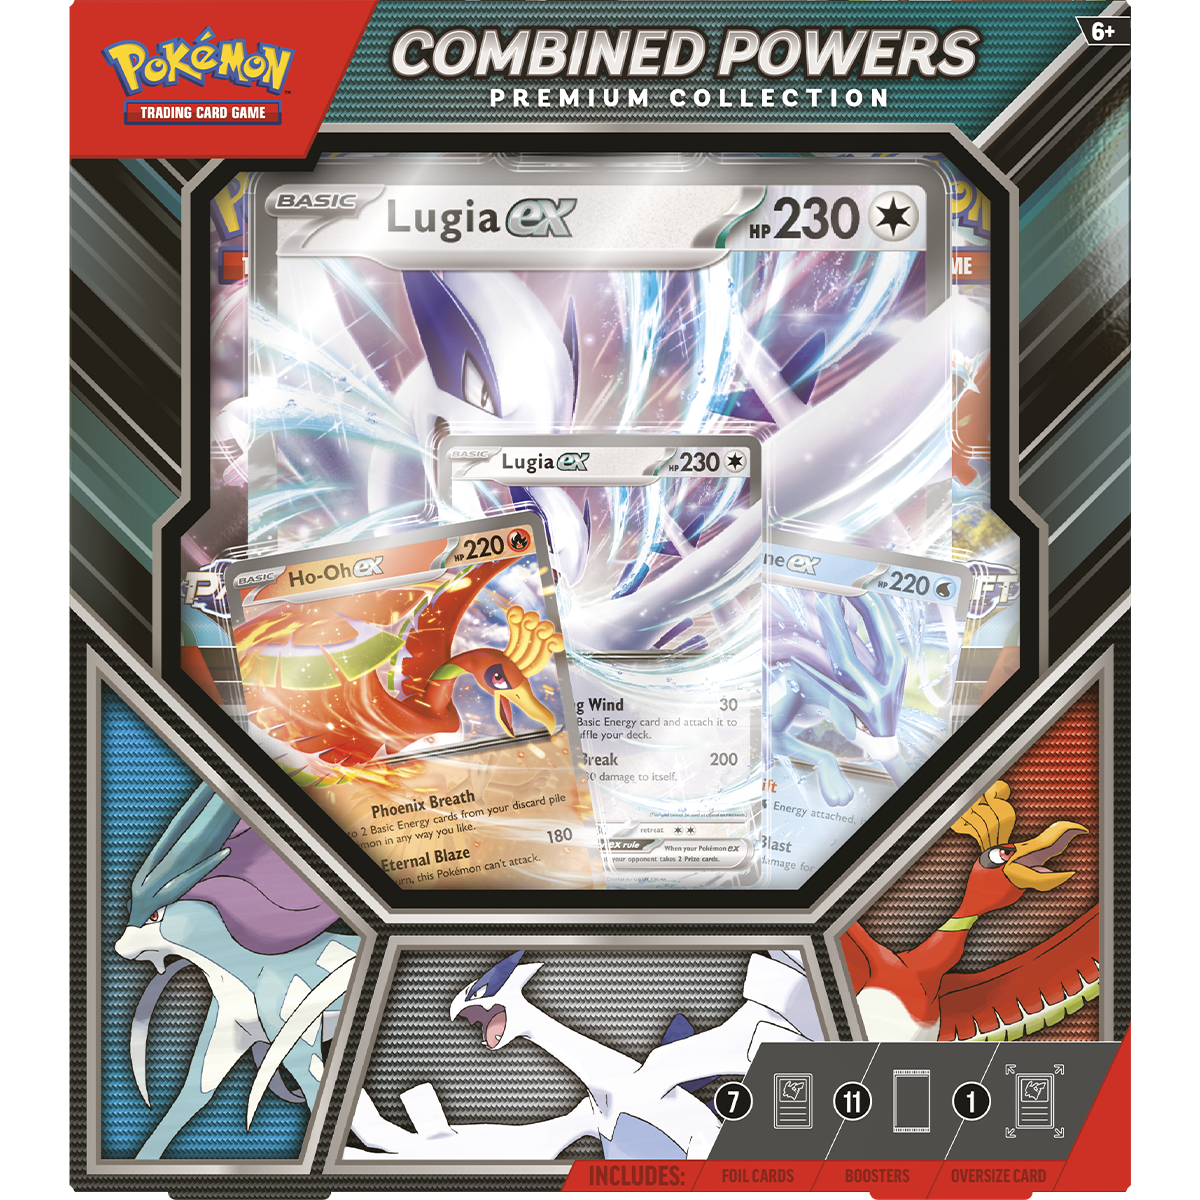 Pokémon combined powers premium collection - POKEMON